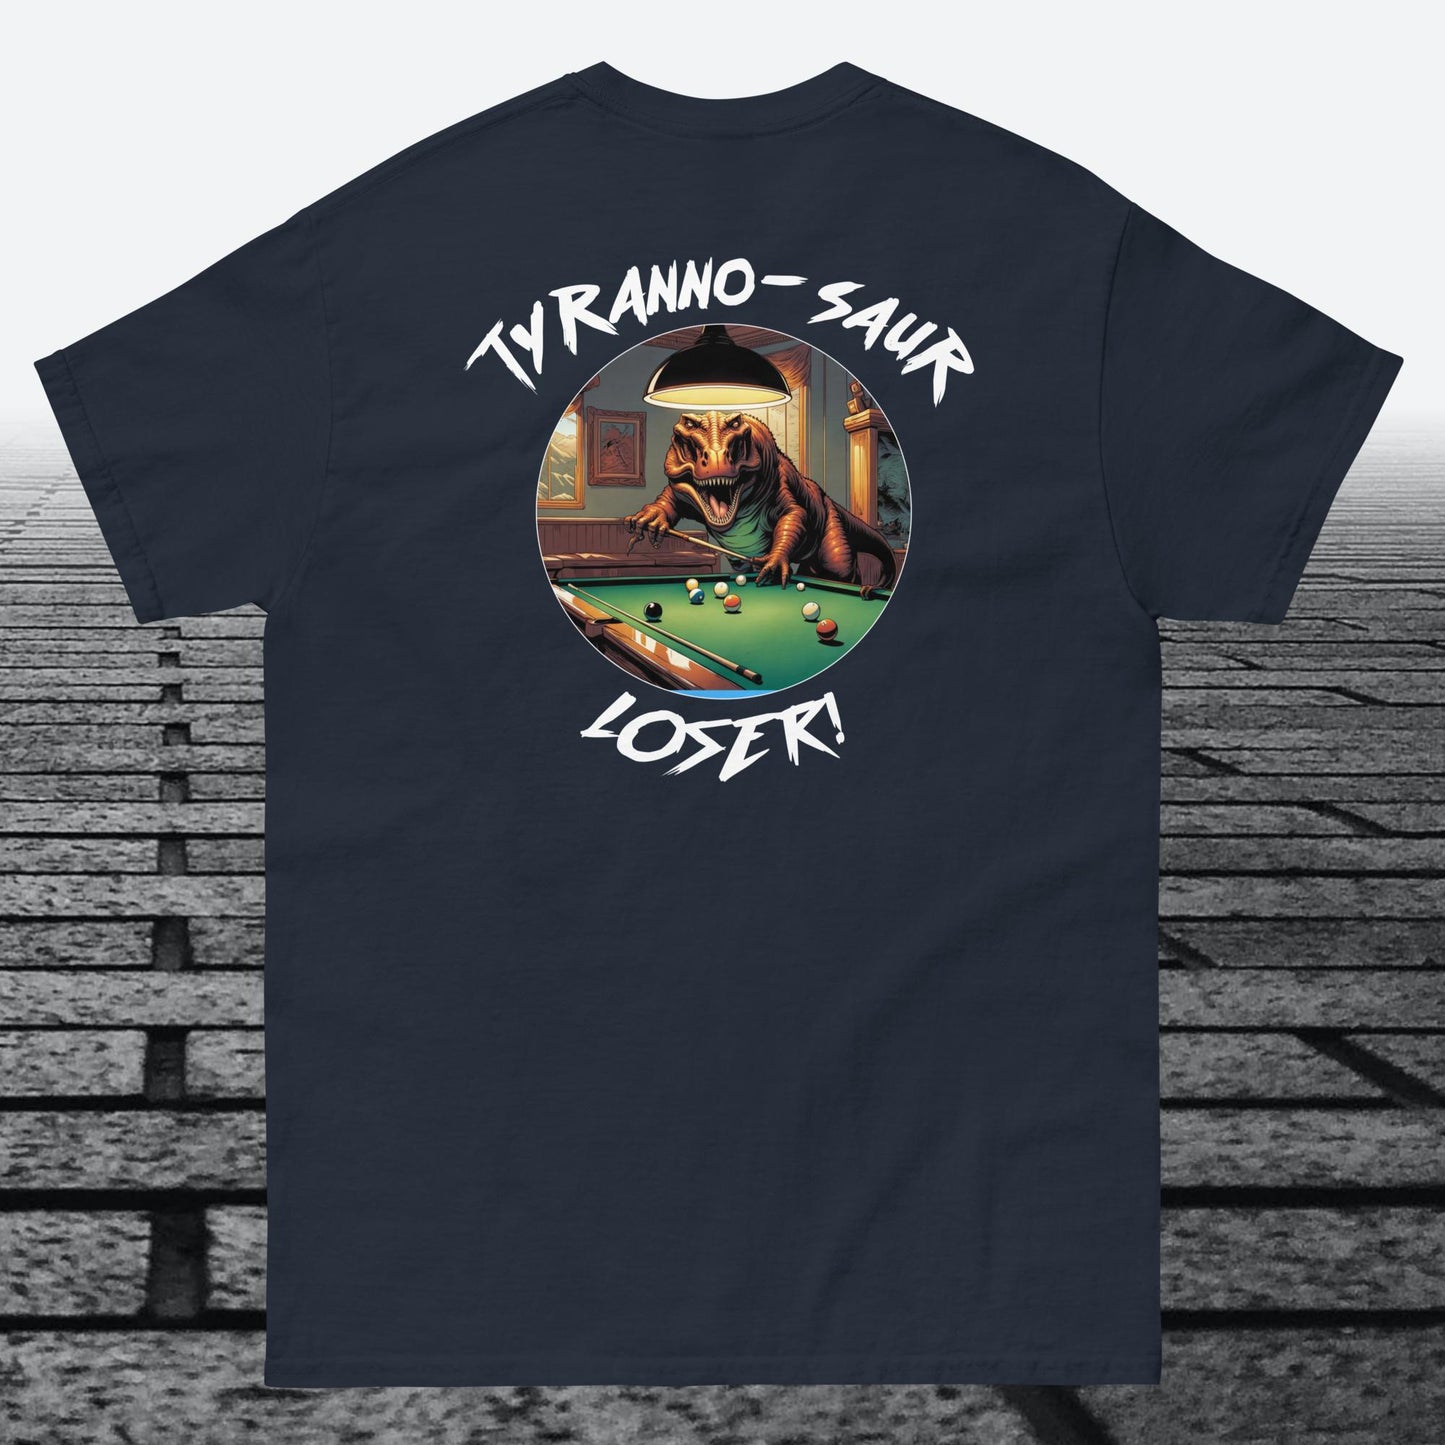 Tyranno-Saur Loser, on the back, Cotton t-shirt